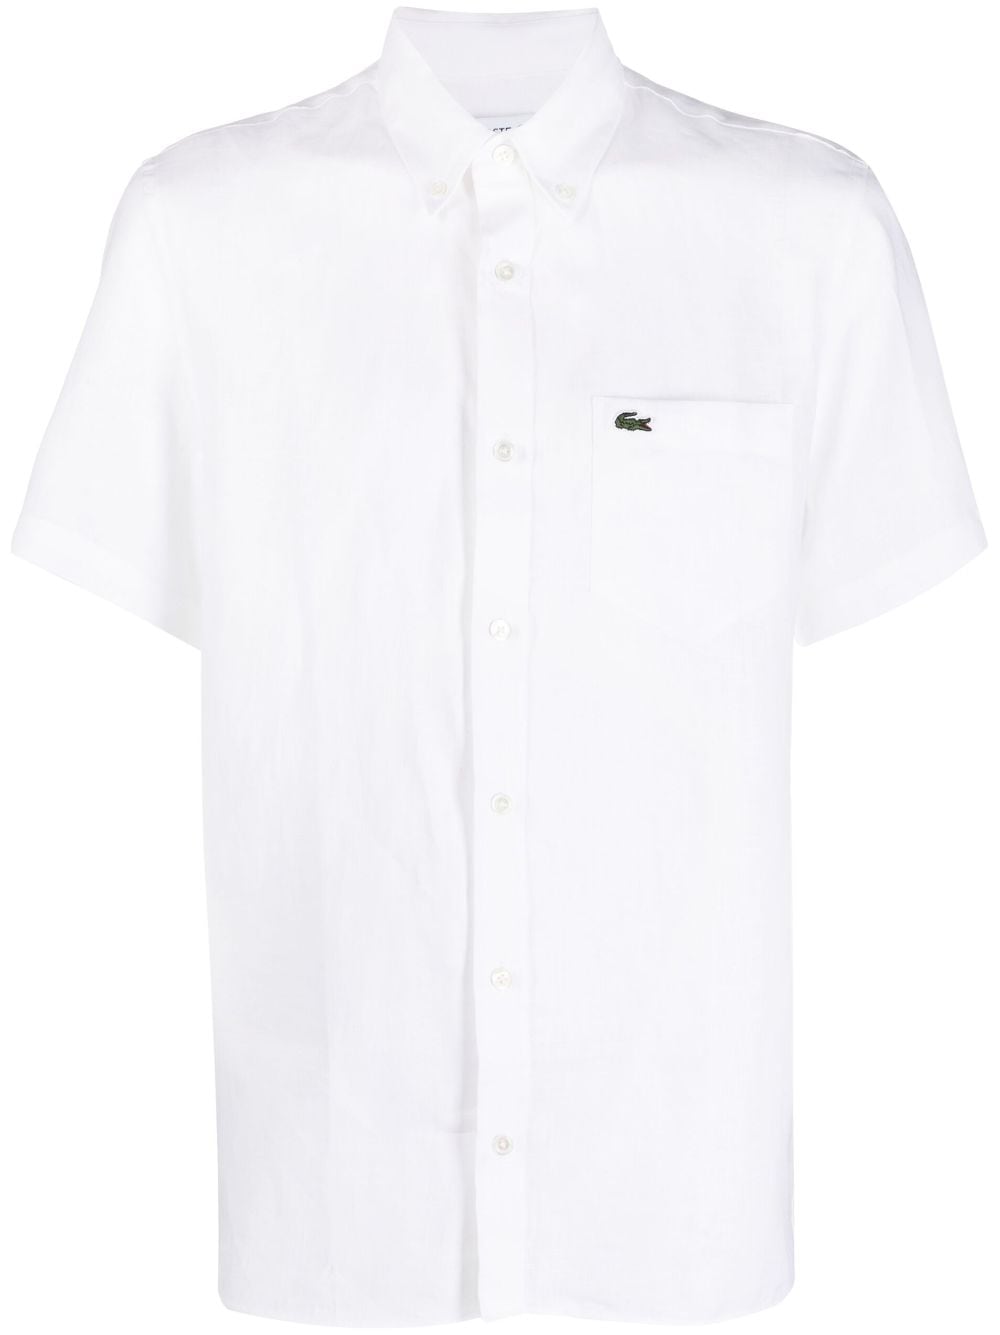 Lacoste embroidered logo short-sleeve shirt - White von Lacoste